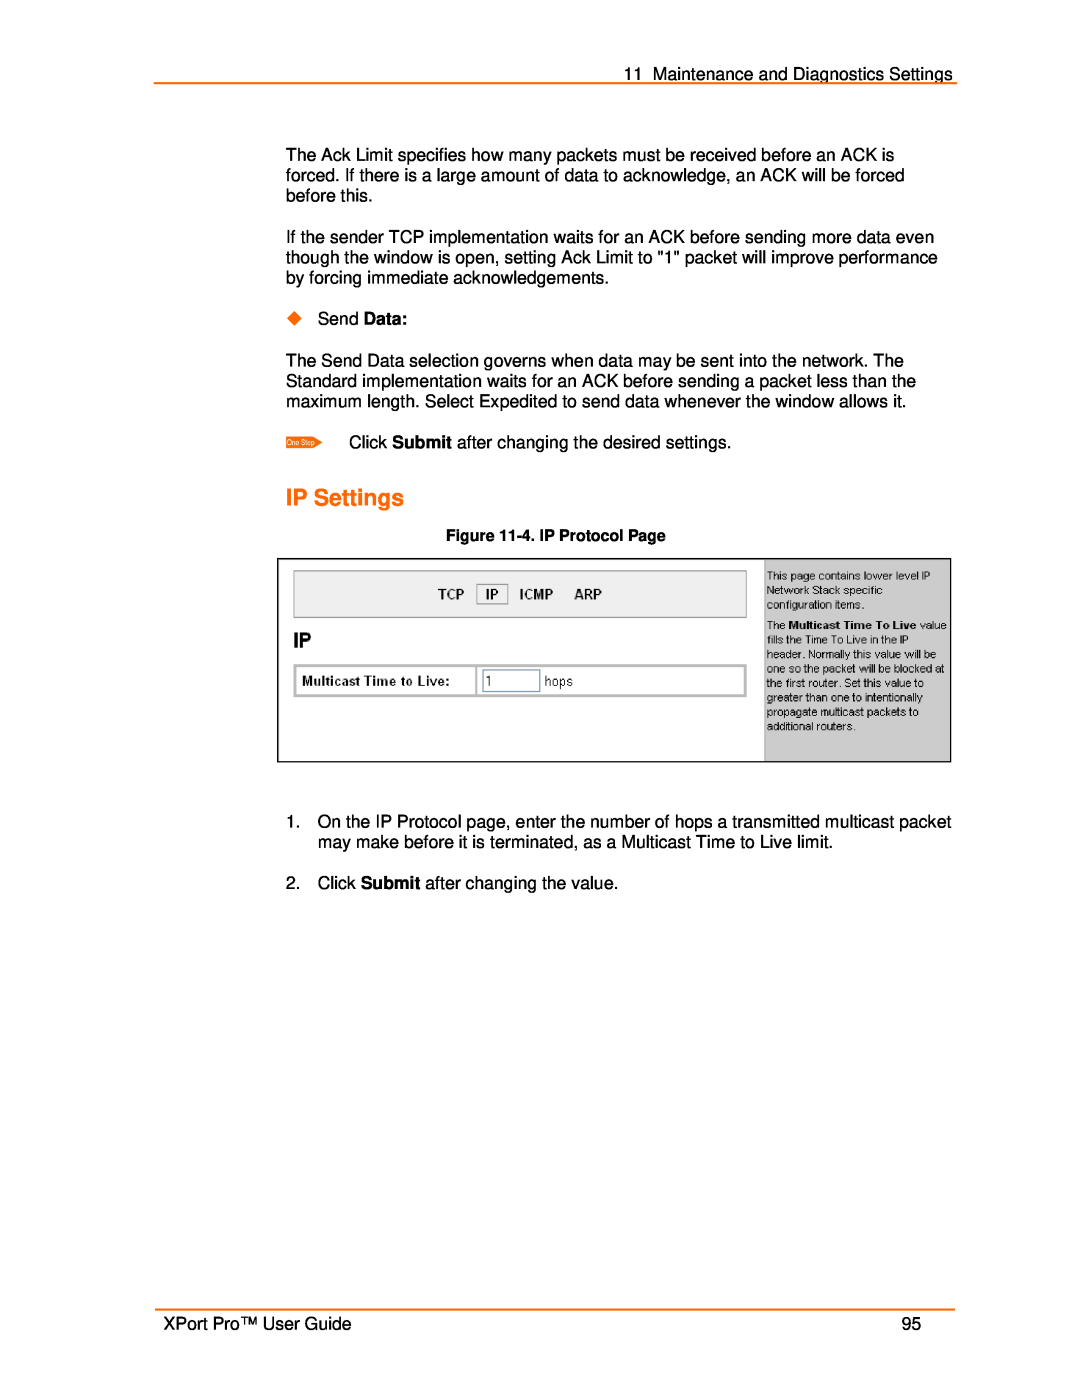 Lantronix 900-560 manual IP Settings, 4. IP Protocol Page 